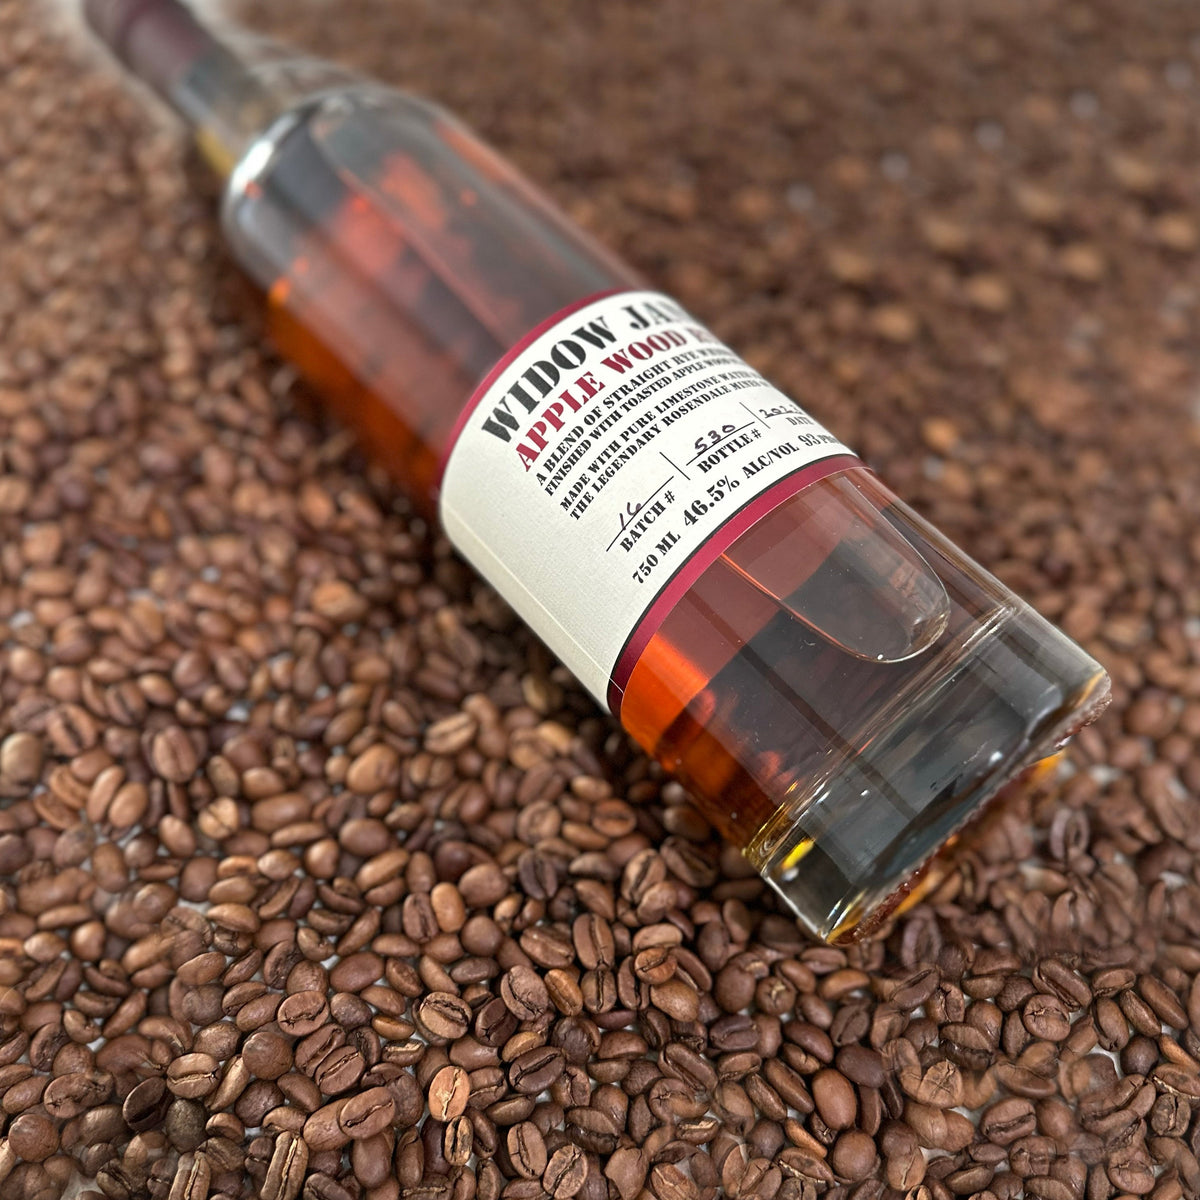 Best bba craft coffee online and best bourbon barrel aged craft coffee online